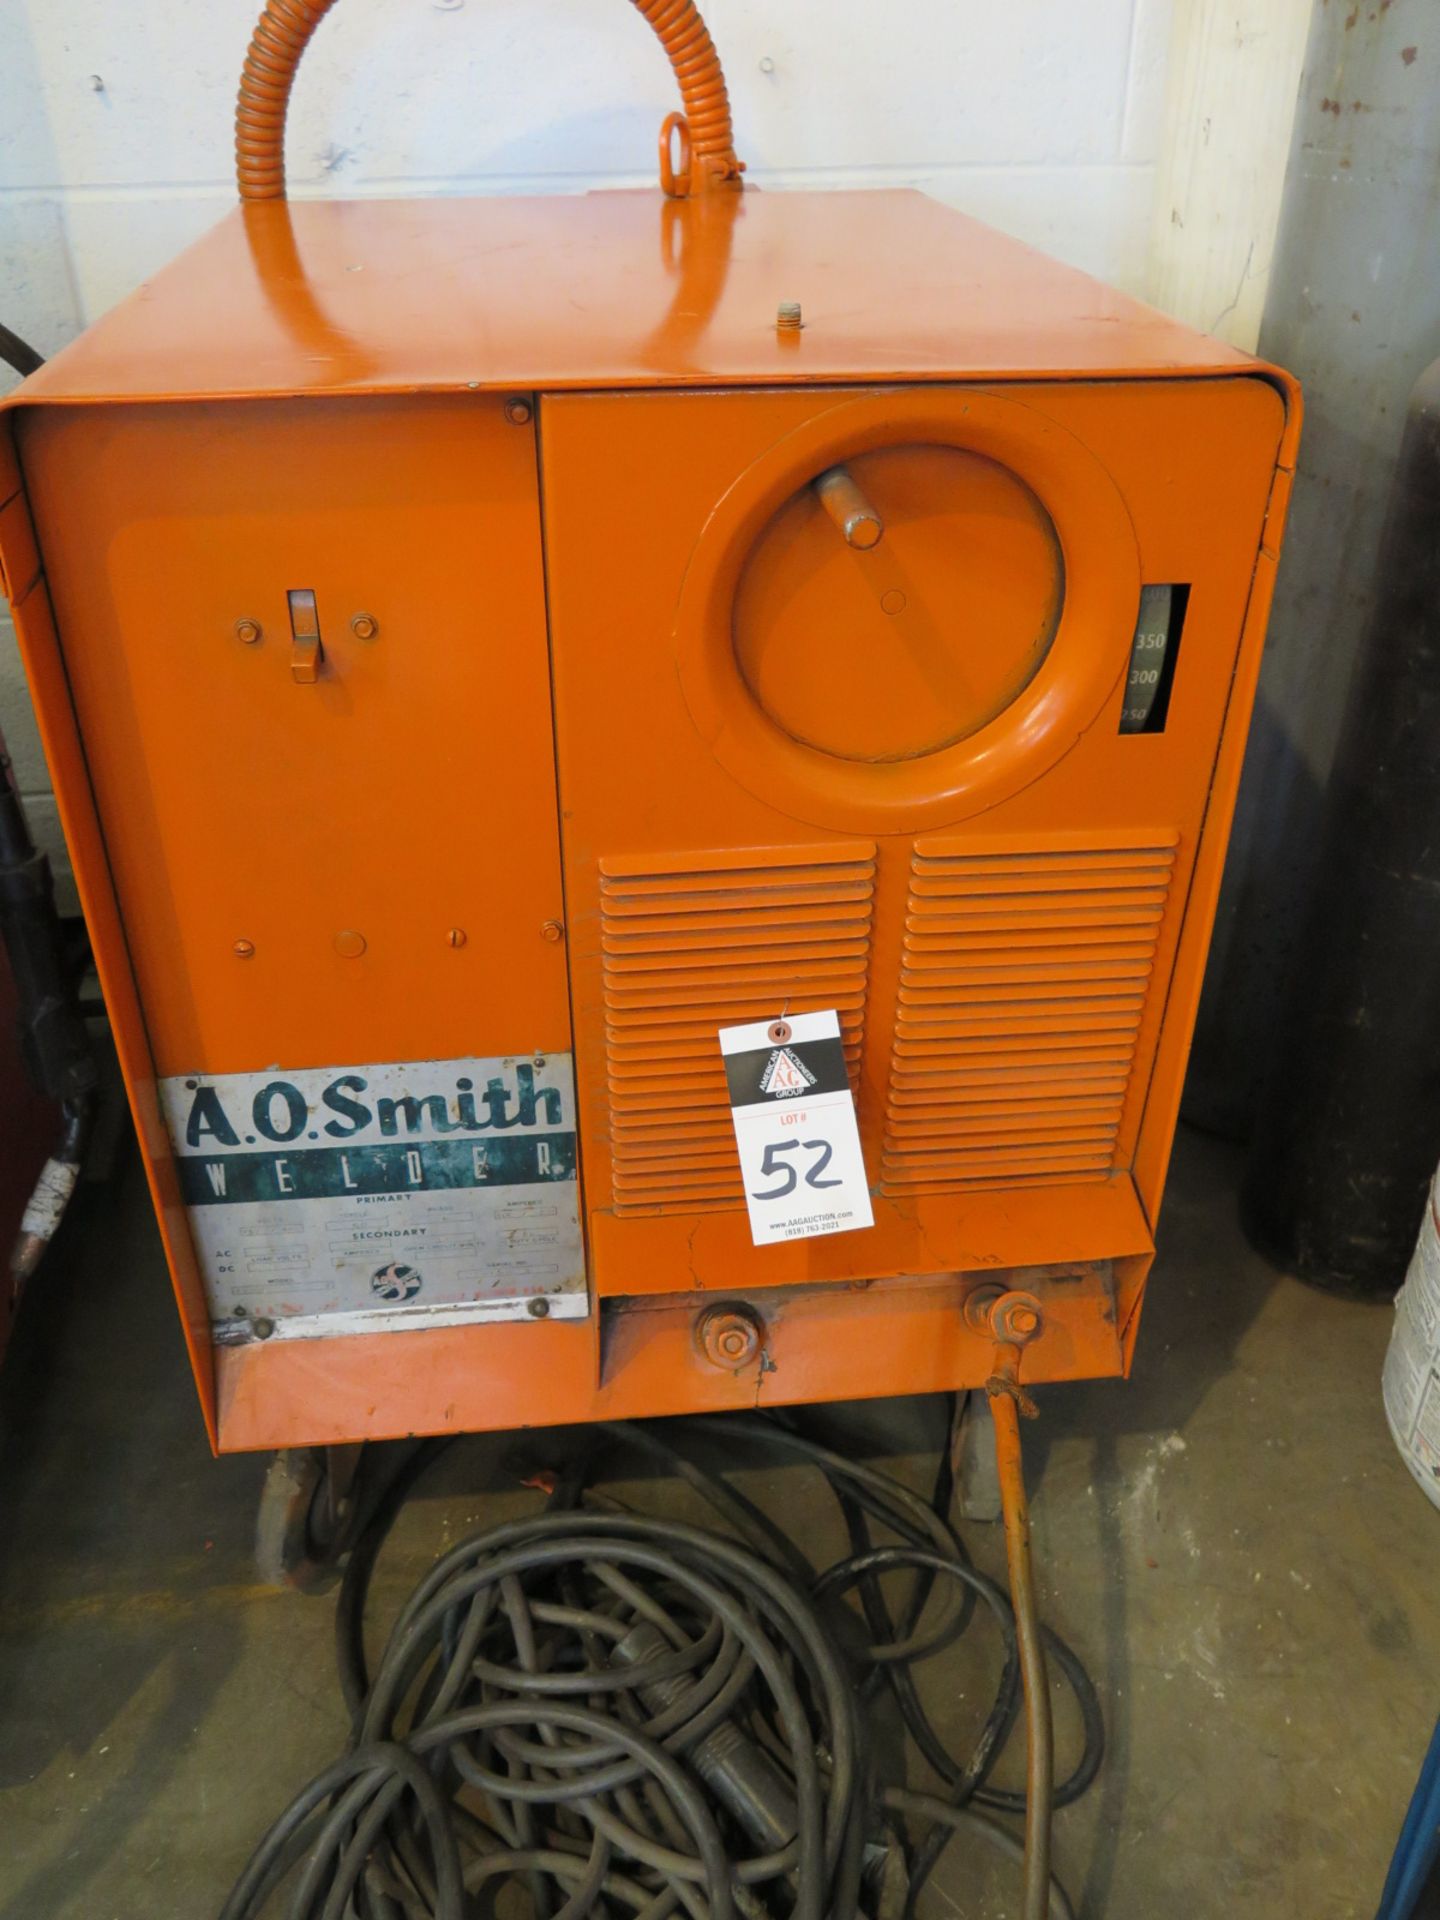 A.O.Smith mdl. A-300L Arc Welding Power Source s/n 033-6102-11